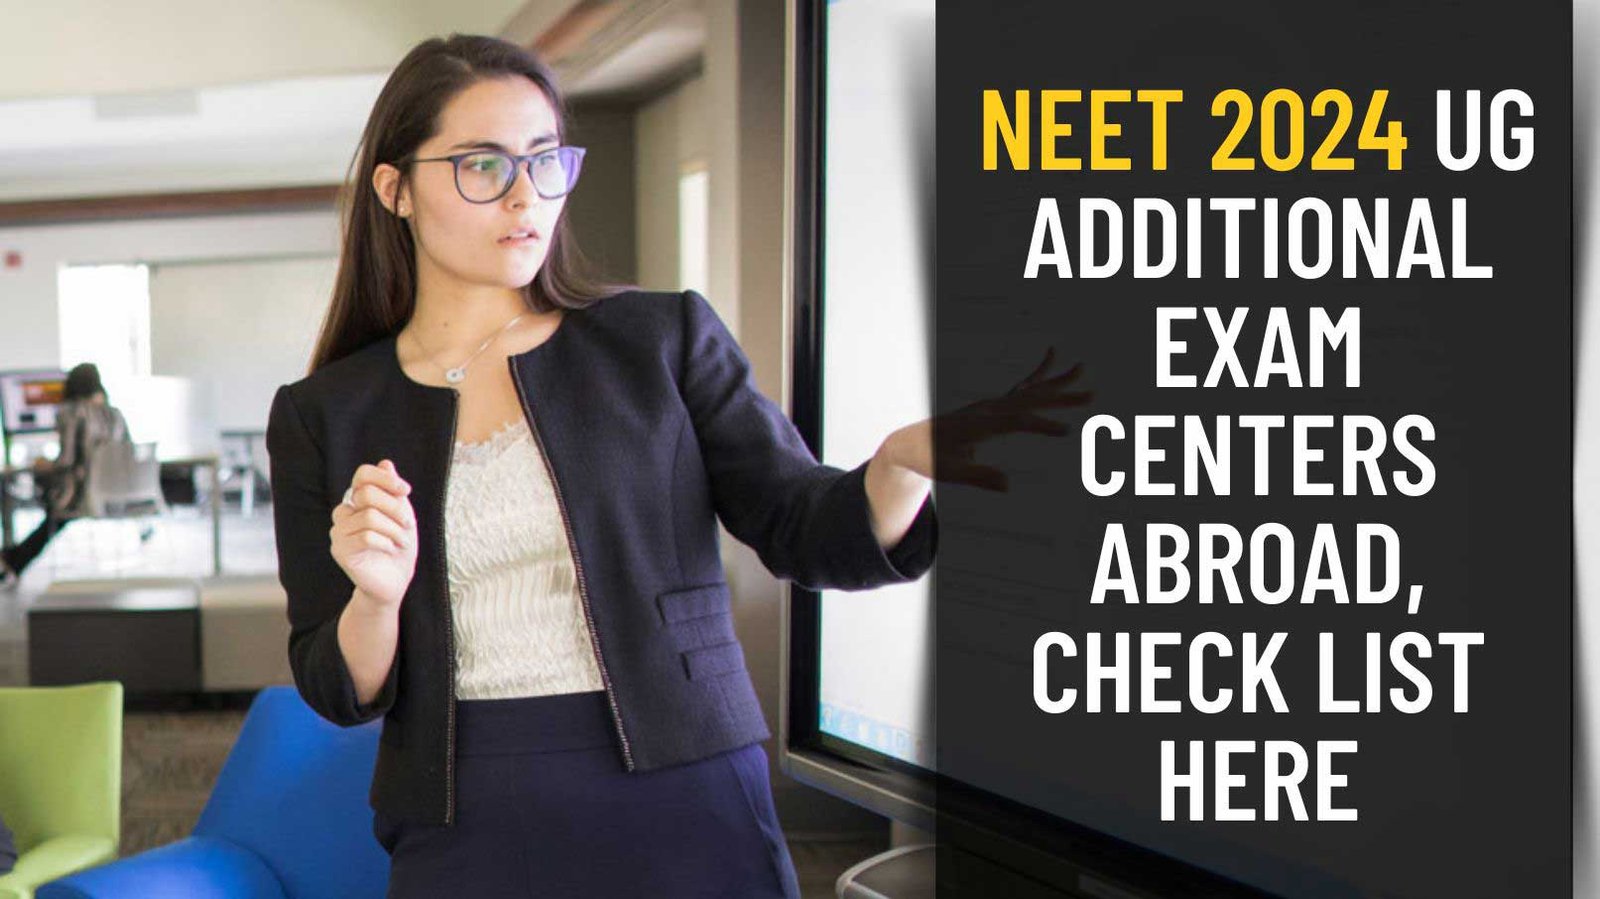 NEET 2024 UG Additional Exam Centers Abroad, Check list here